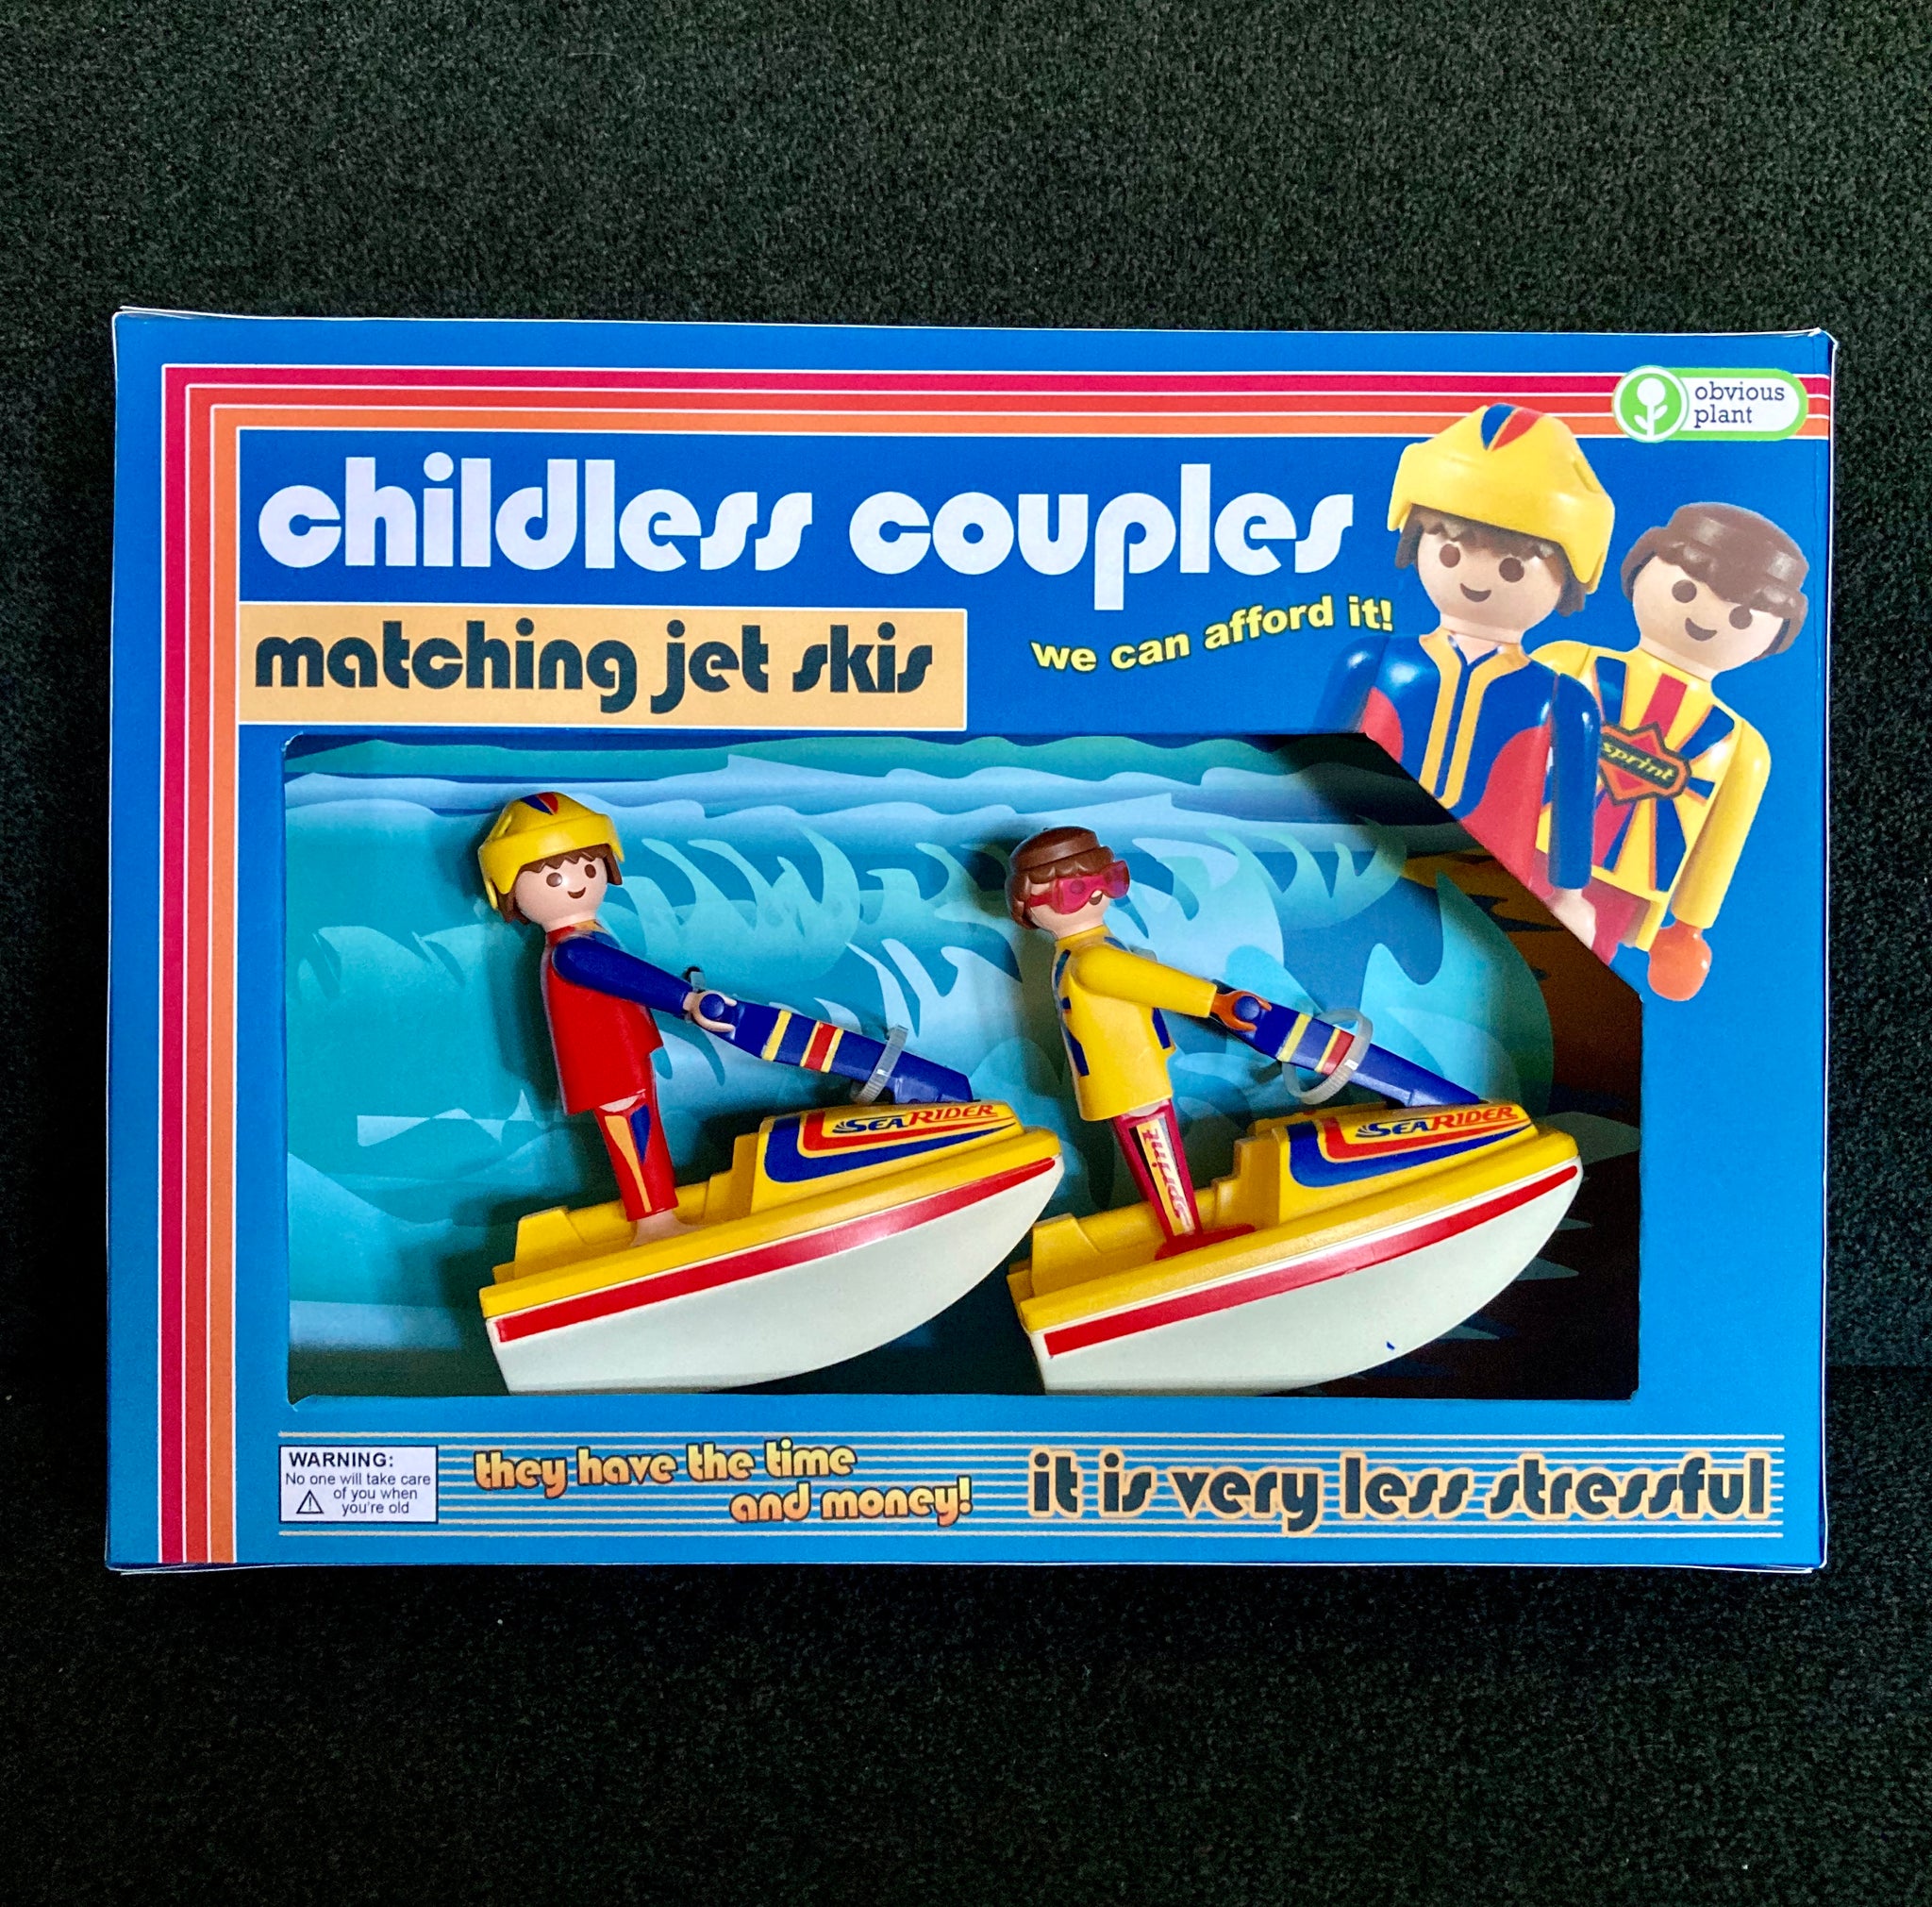 Childless Couples - Matching Jetskis